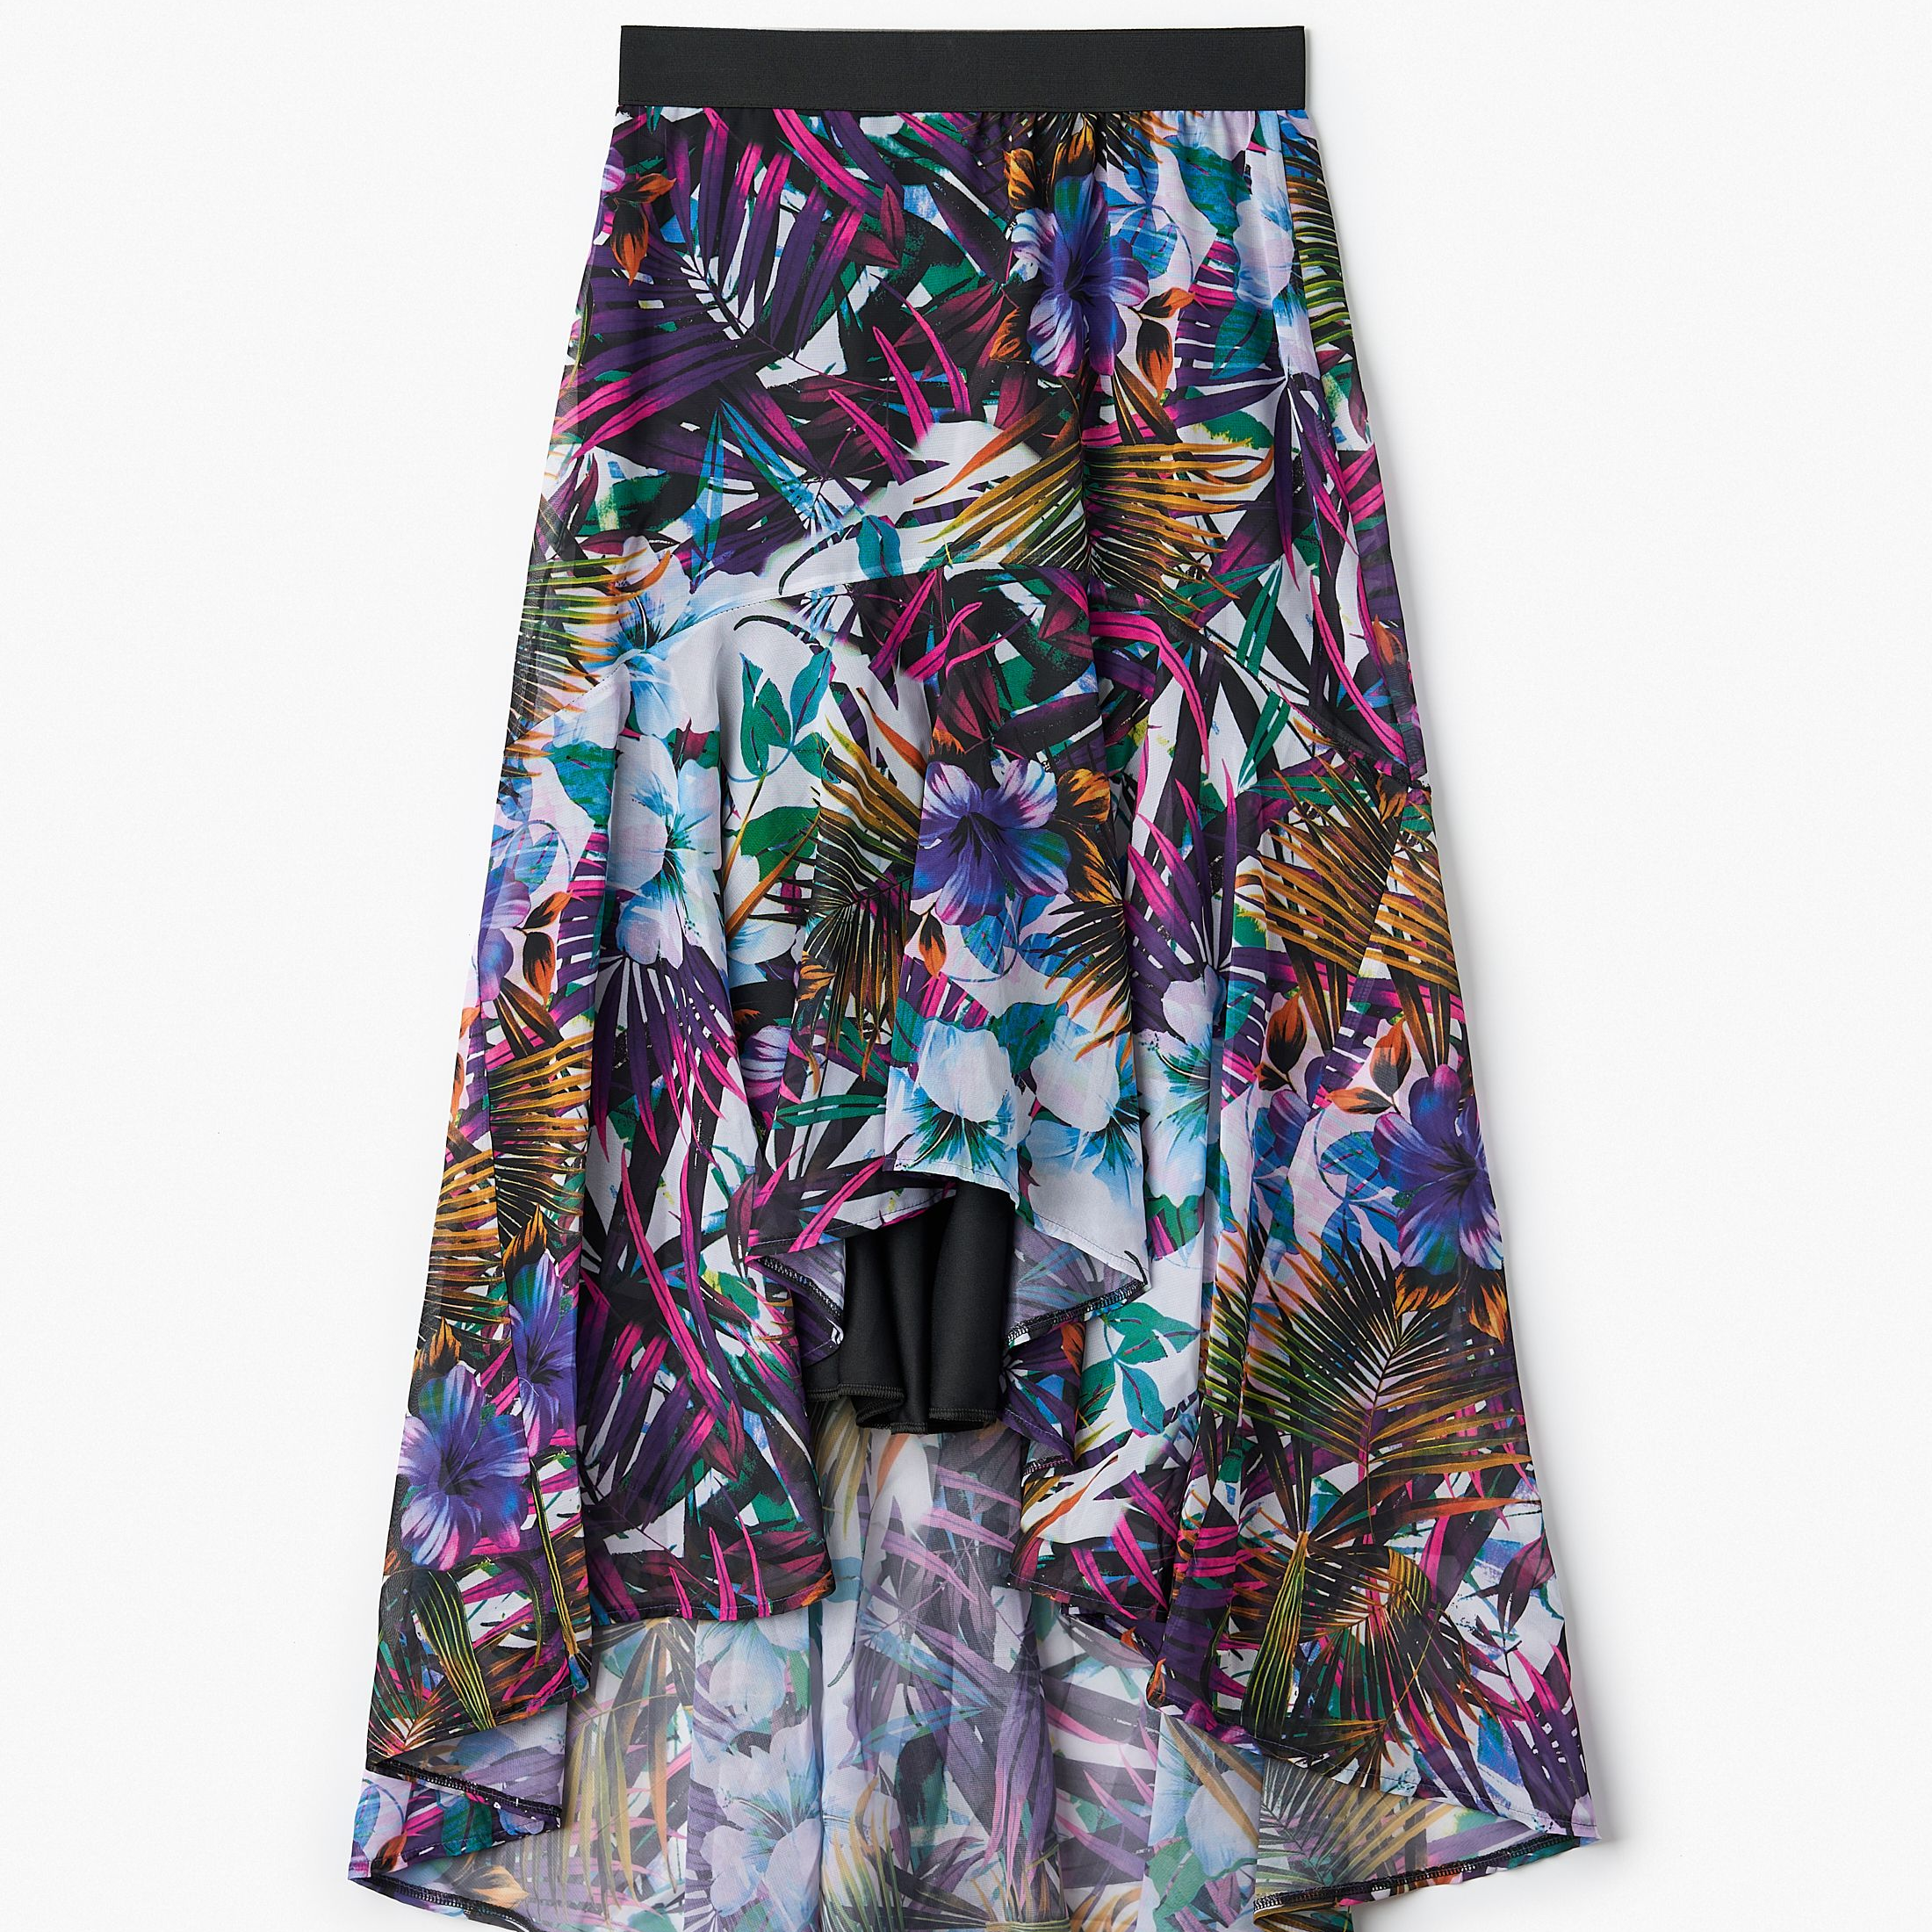 Garden Skirt in Iris